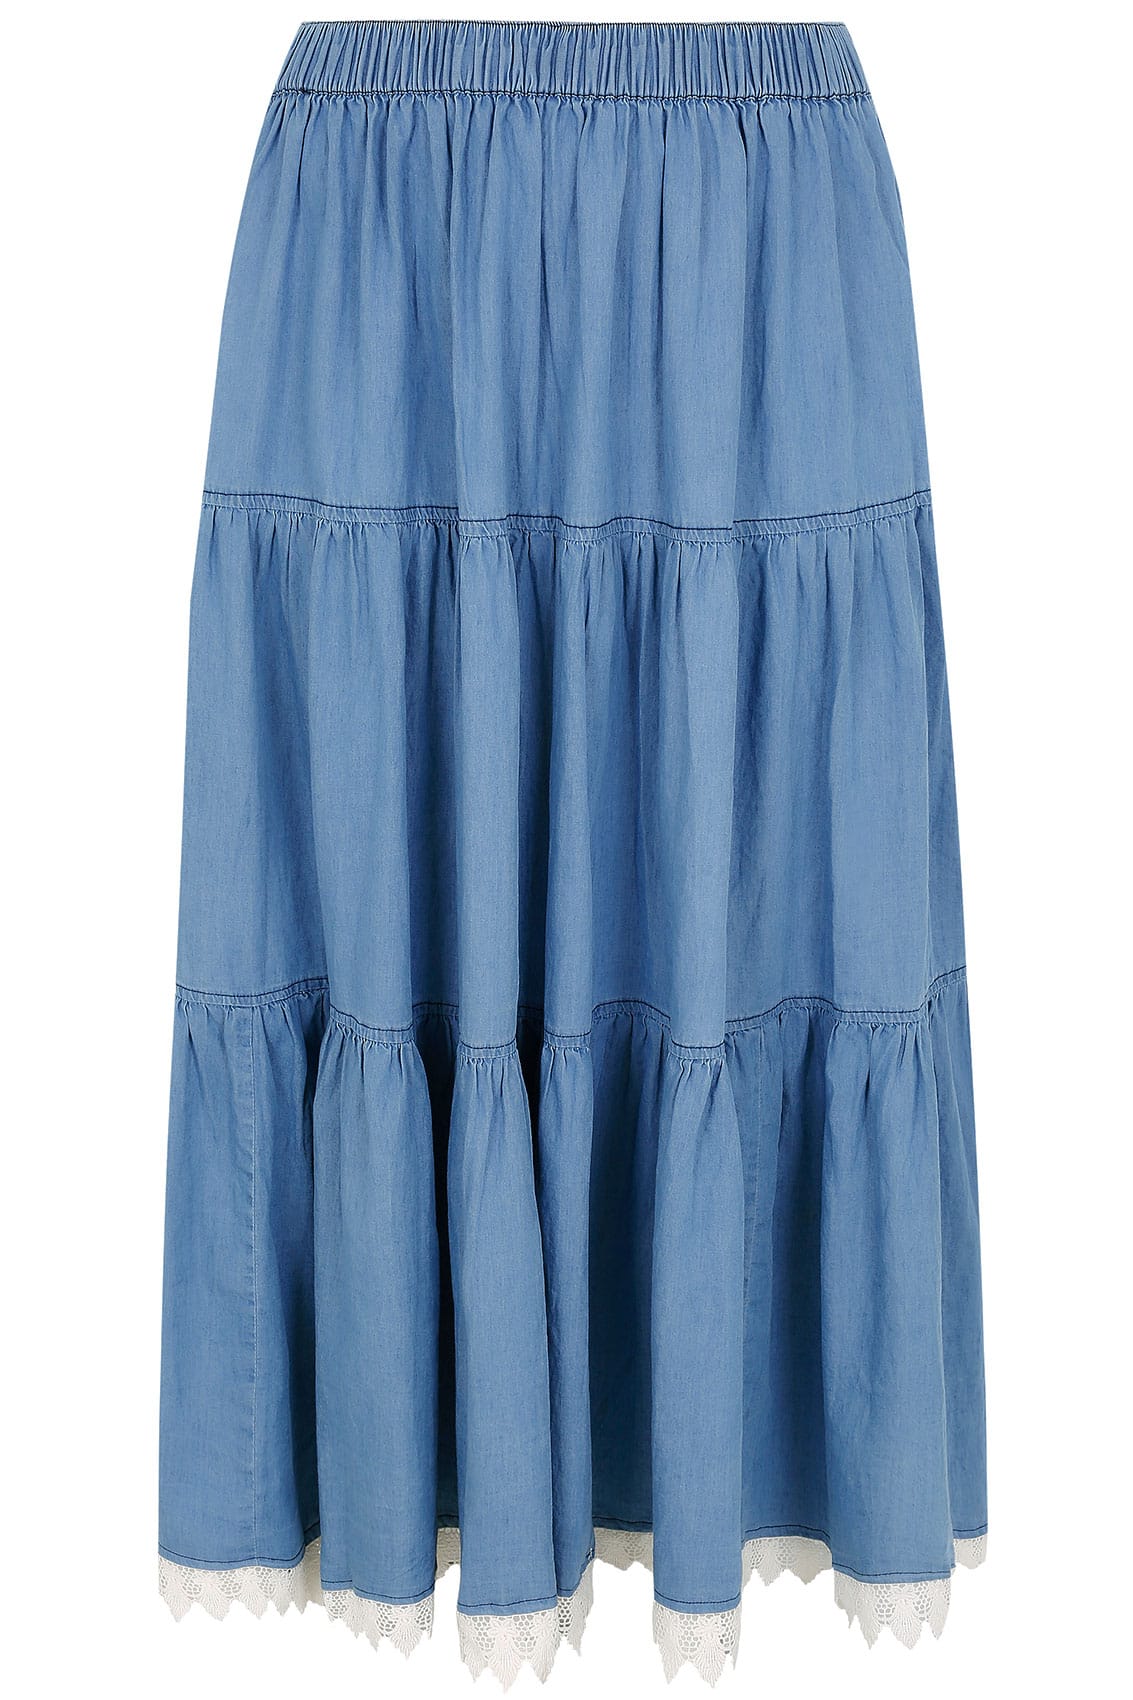 Denim Blue Tiered Maxi Skirt With Lace Trim Hem, Plus size 16 to 36